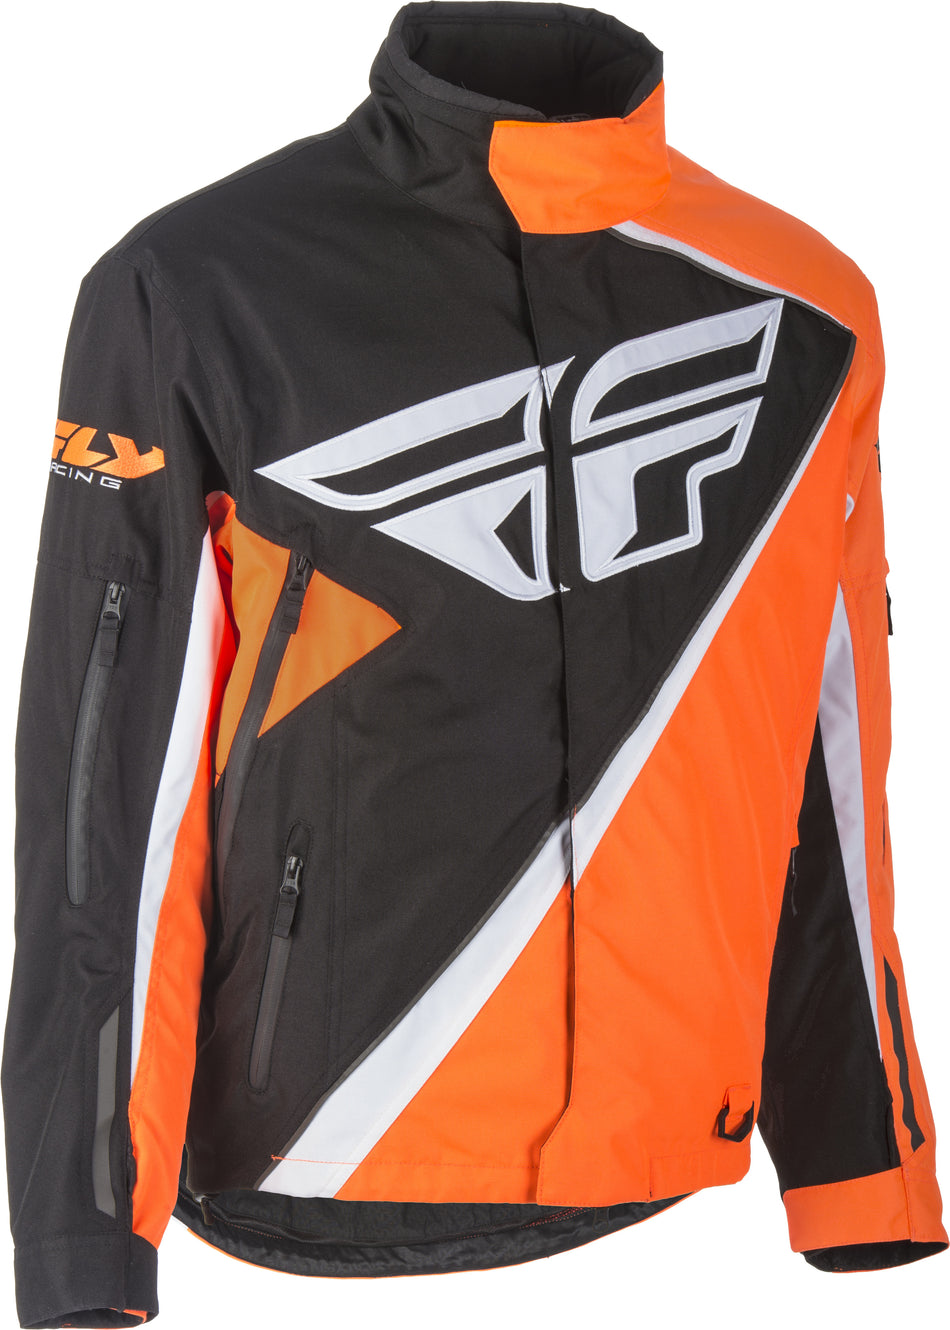 FLY RACING Snx Jacket Orange/Black Yxs #6152 470-4078YXS